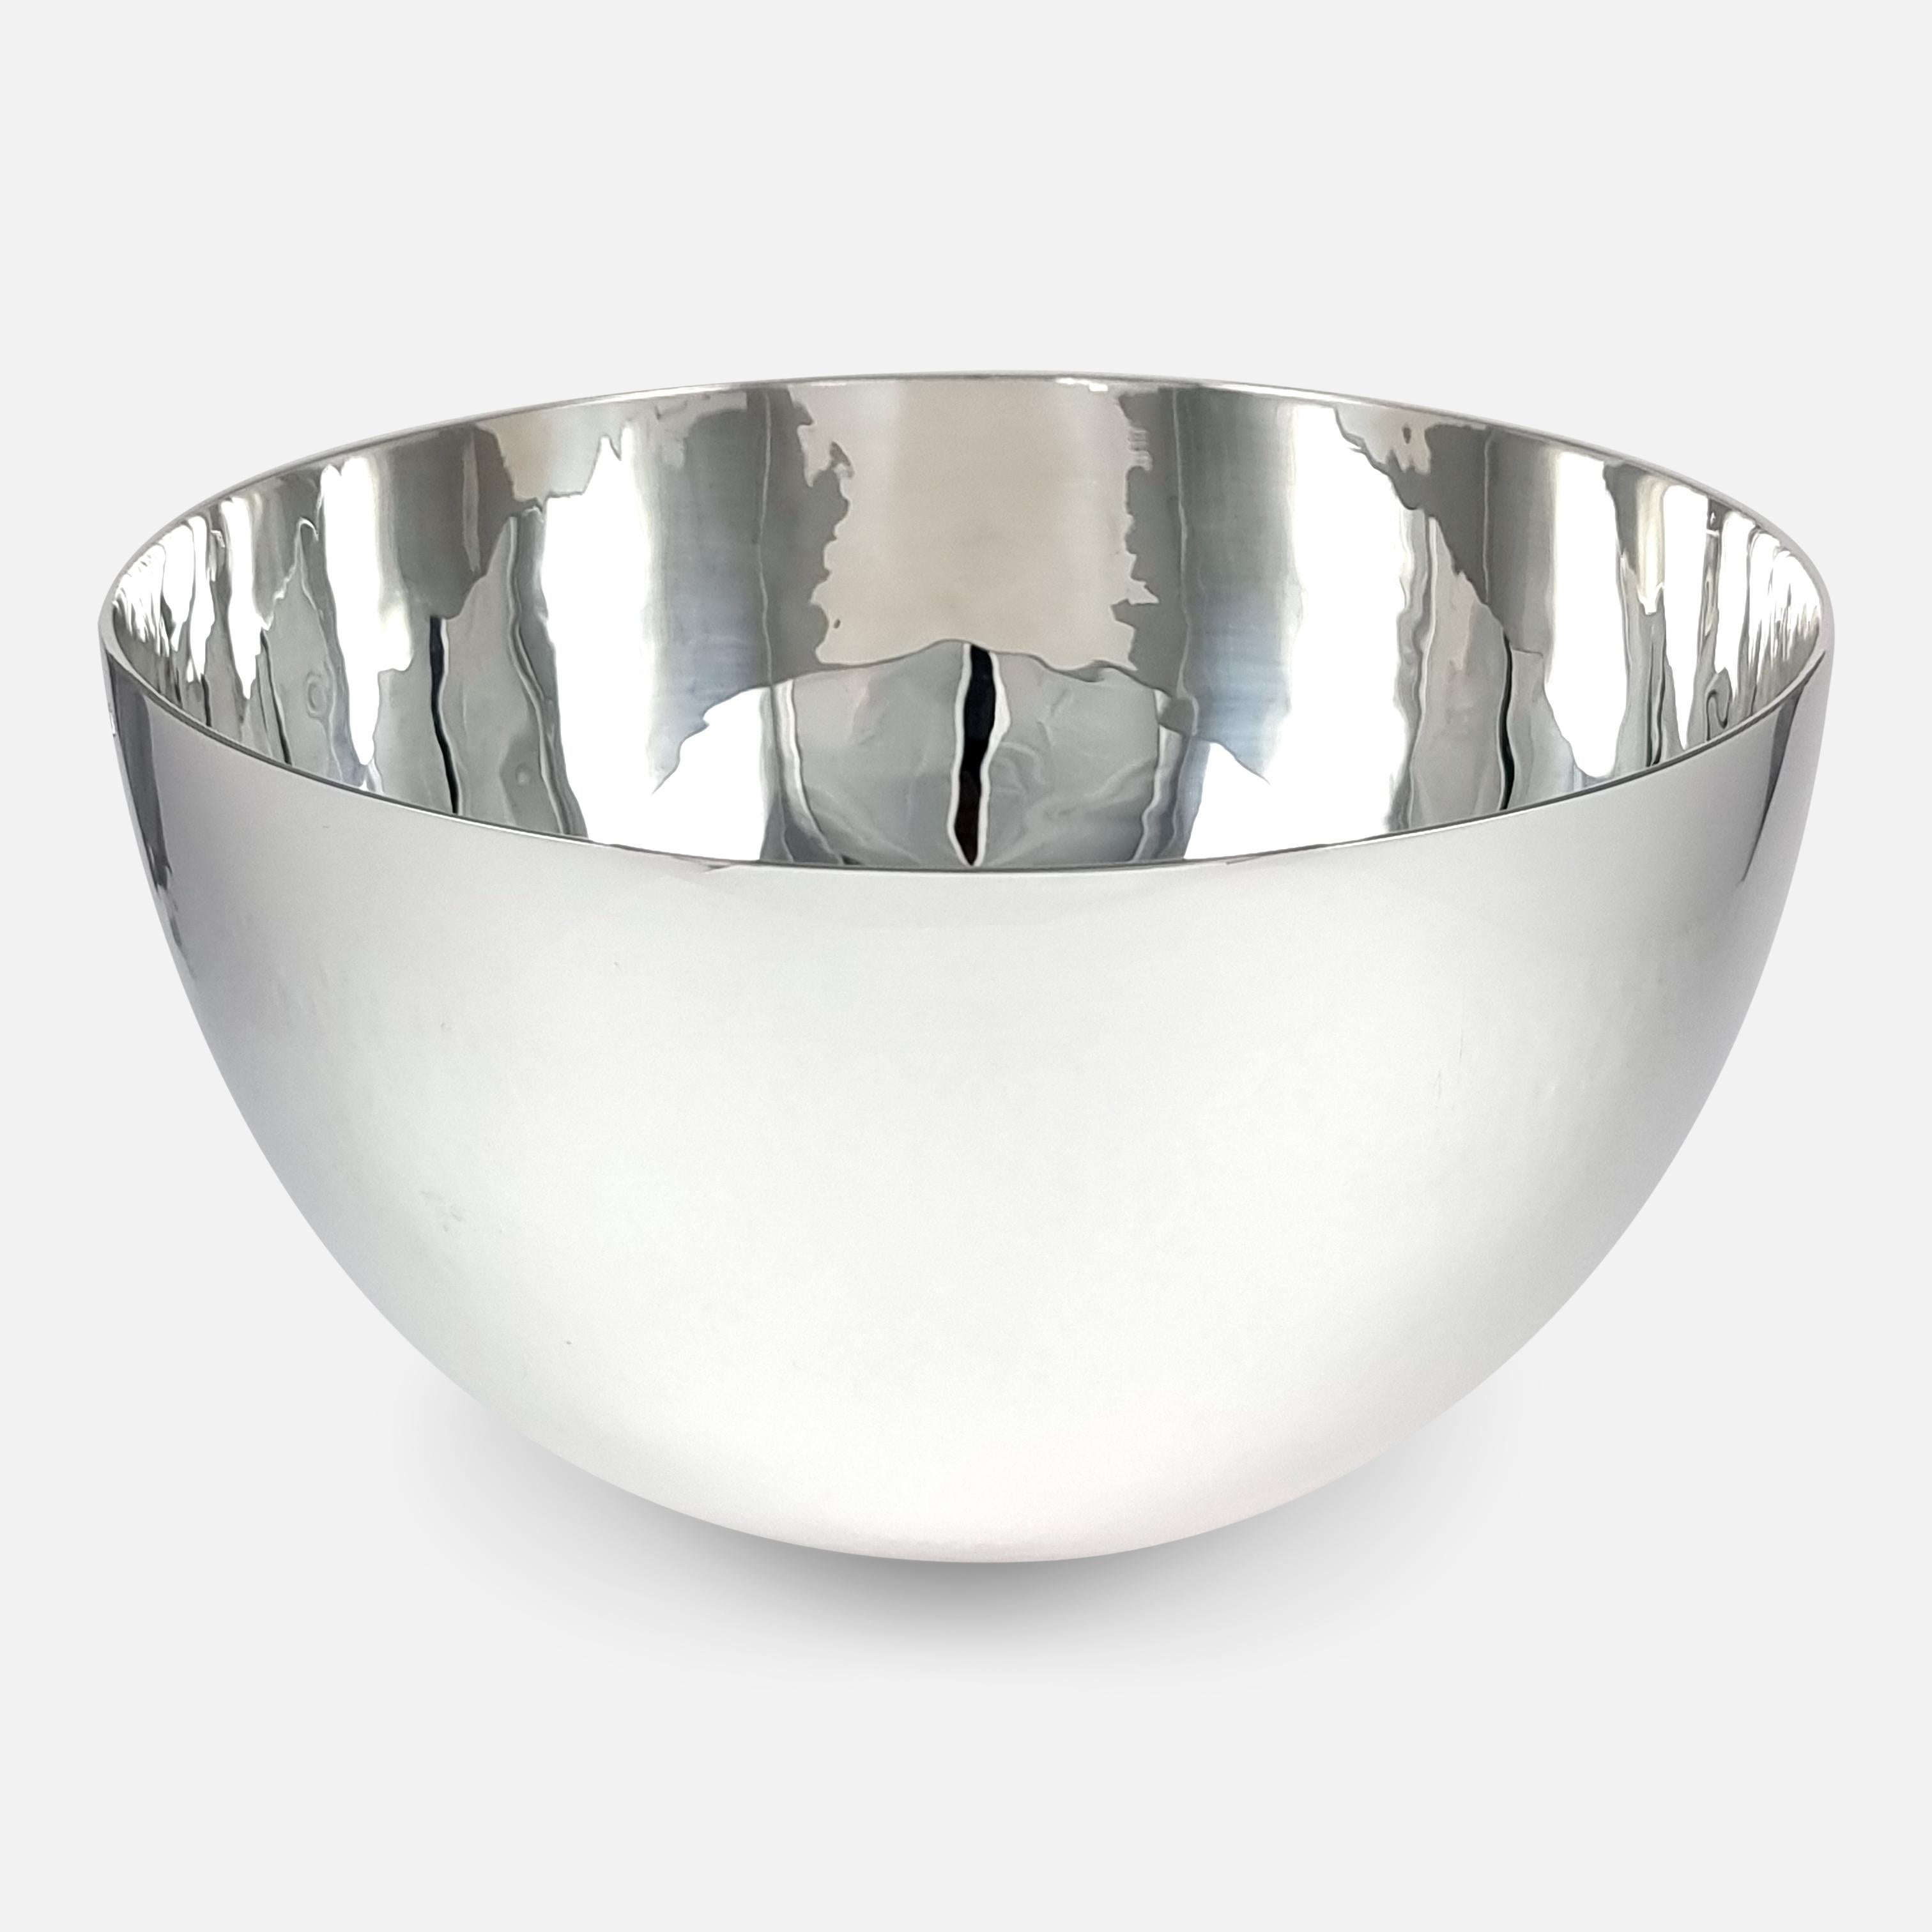 Hammered Elizabeth II Sterling Silver Tumble Fruit Bowl, William & Son, 2015 For Sale